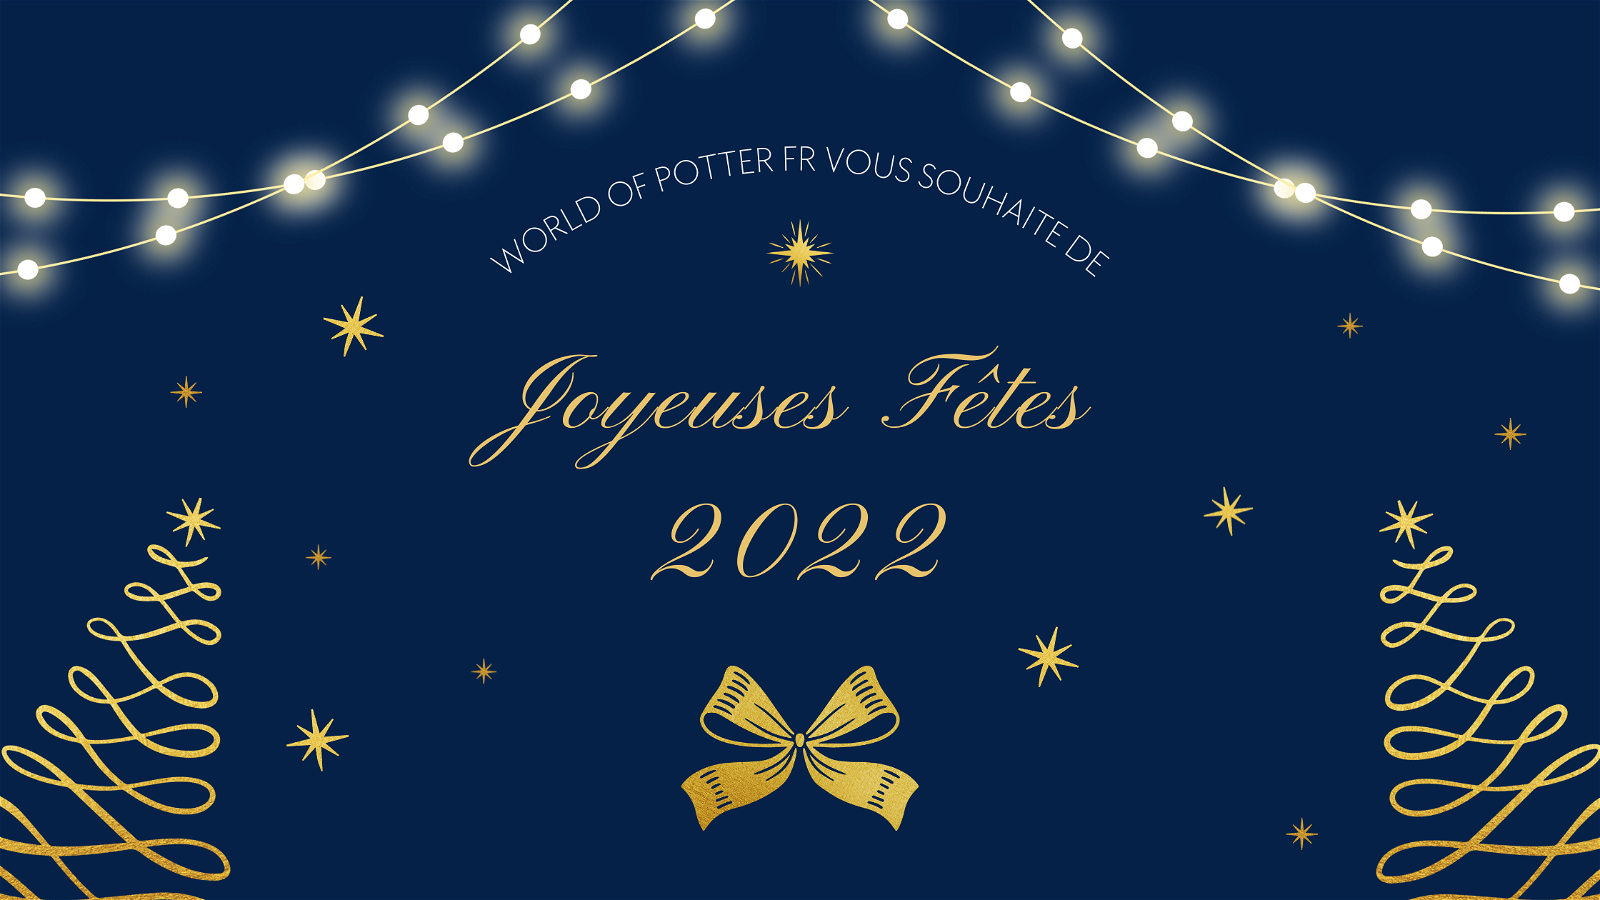 Les calendriers de l'Avent Harry Potter 2022